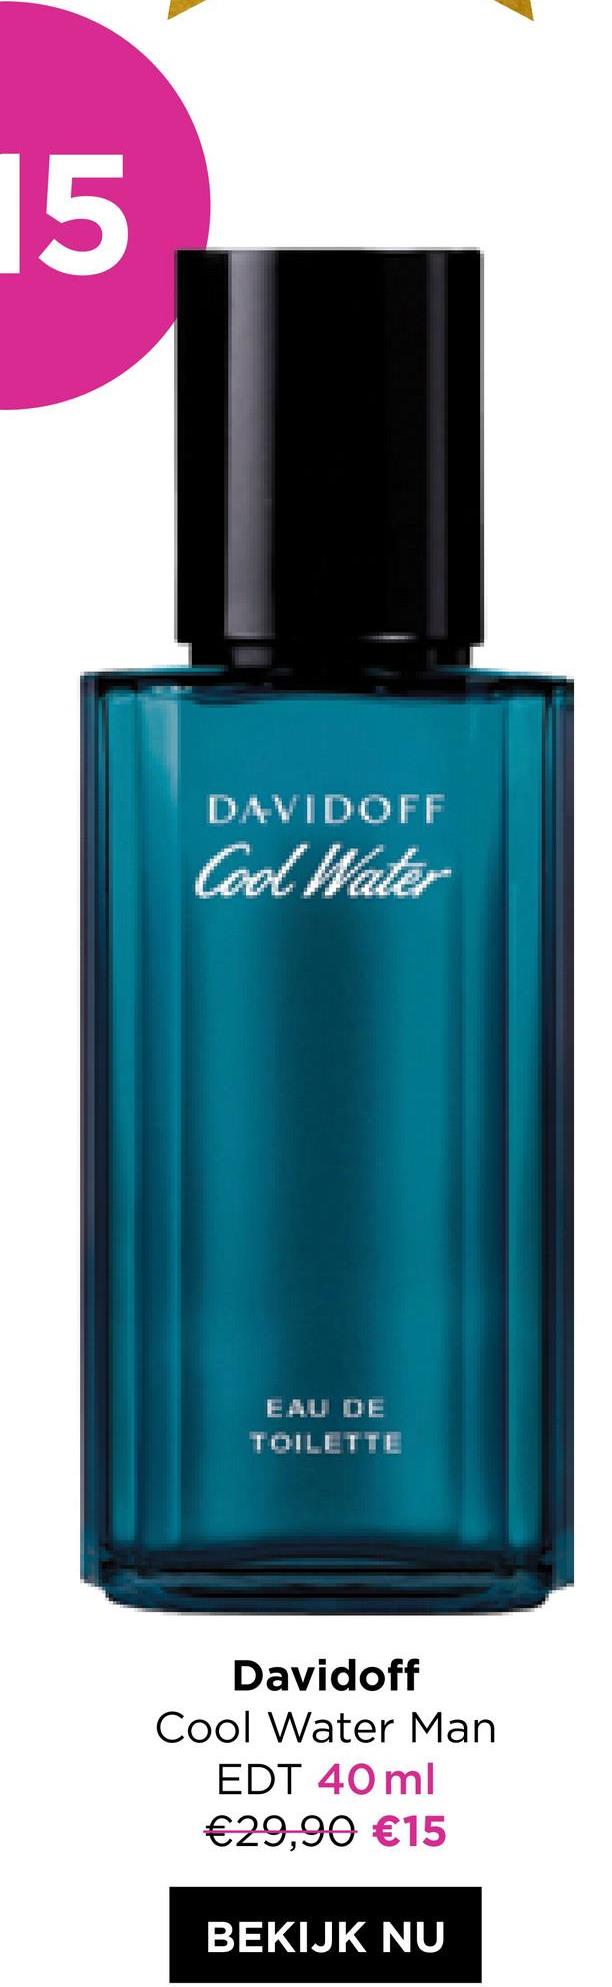 15
DAVIDOFF
Cool Water
EAU DE
TOILETTE
Davidoff
Cool Water Man
EDT 40 ml
€29,90 €15
BEKIJK NU